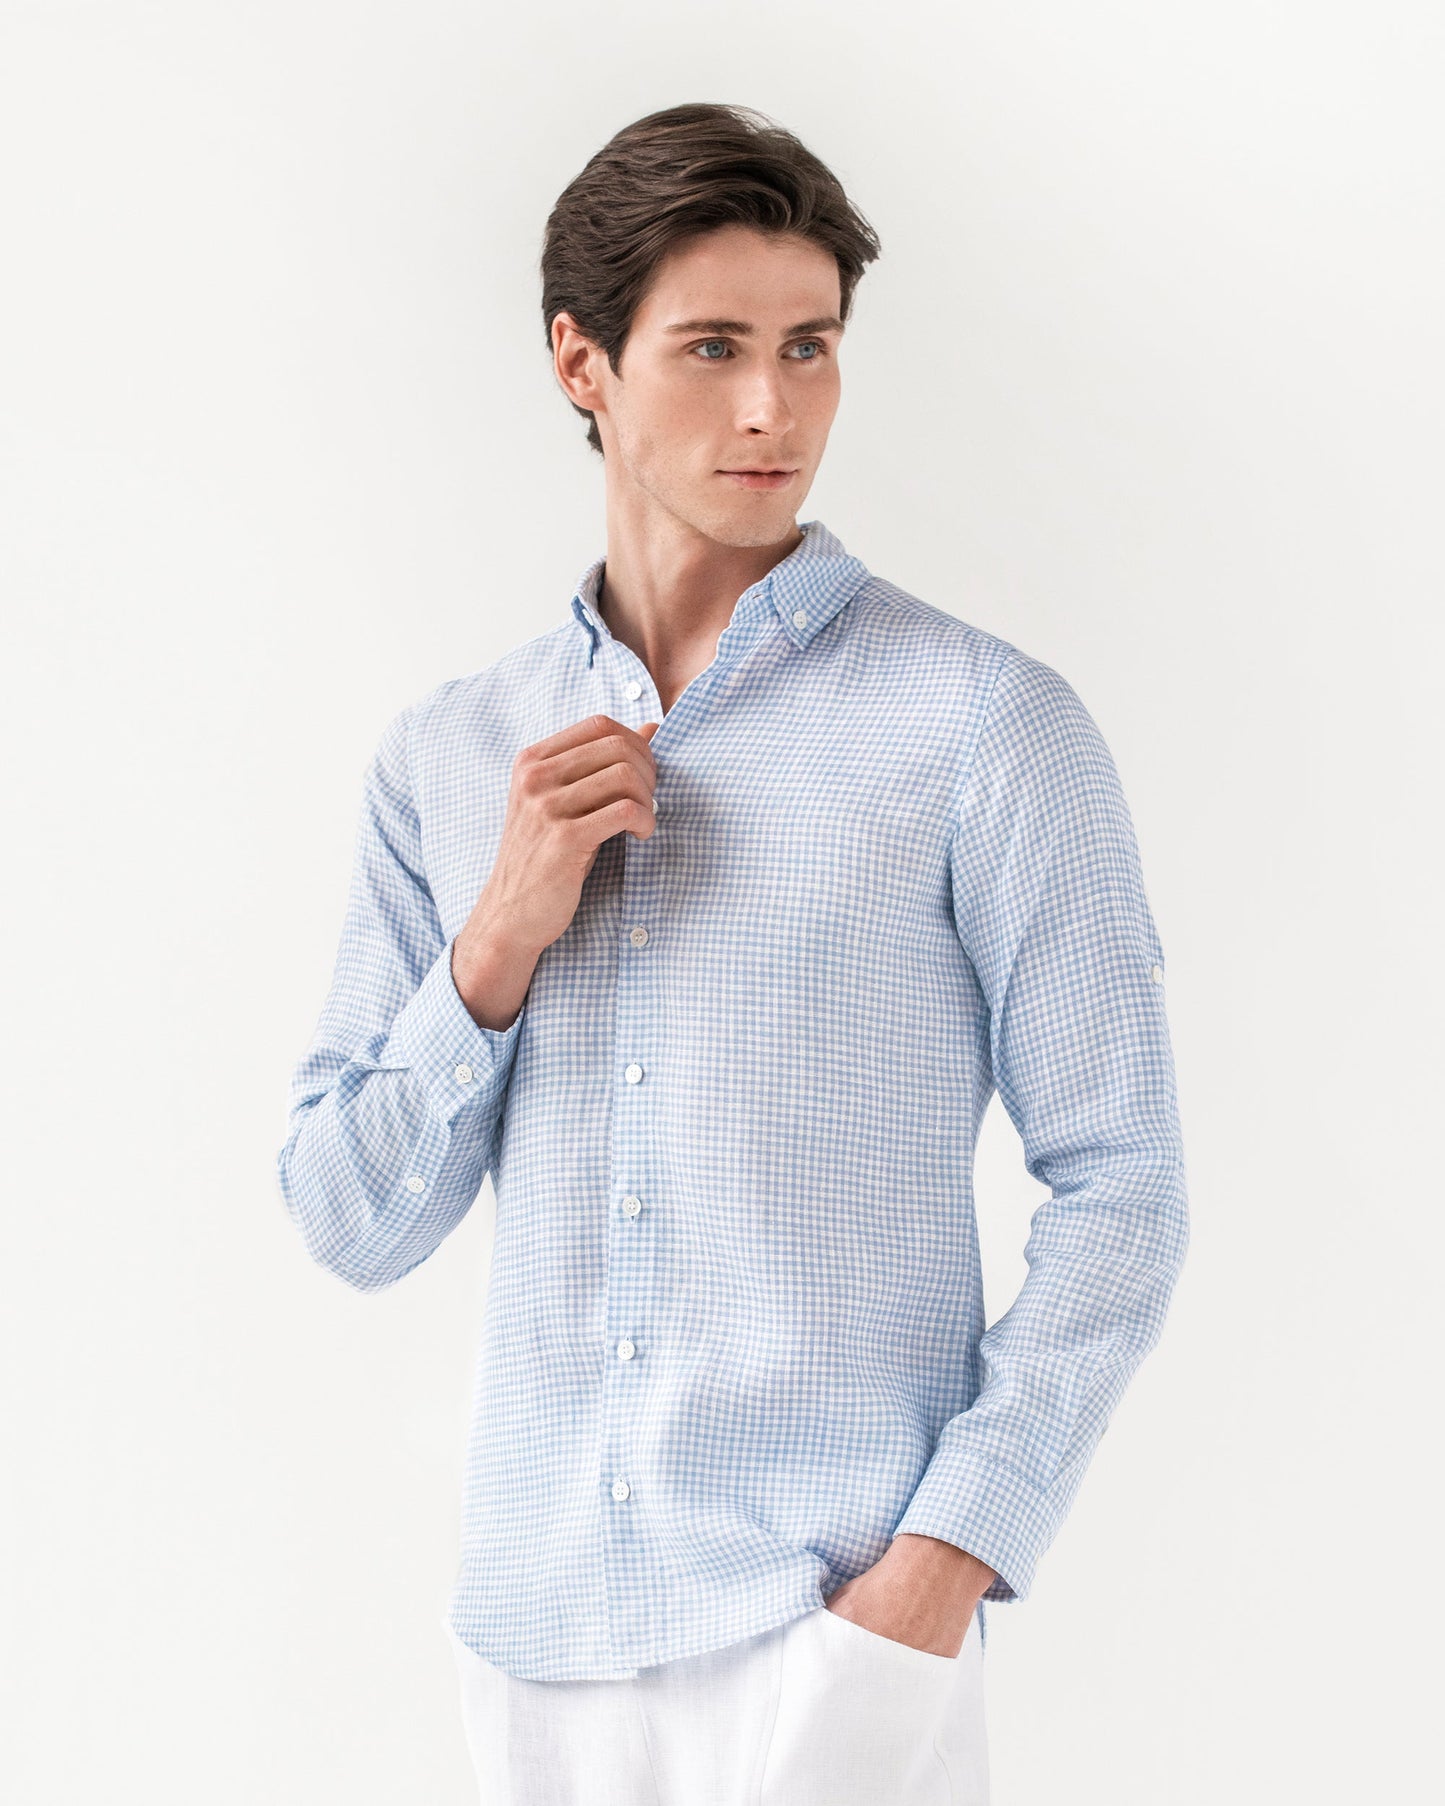 Men's Linen Shirt CORONADO in Blue Gingham | MagicLinen